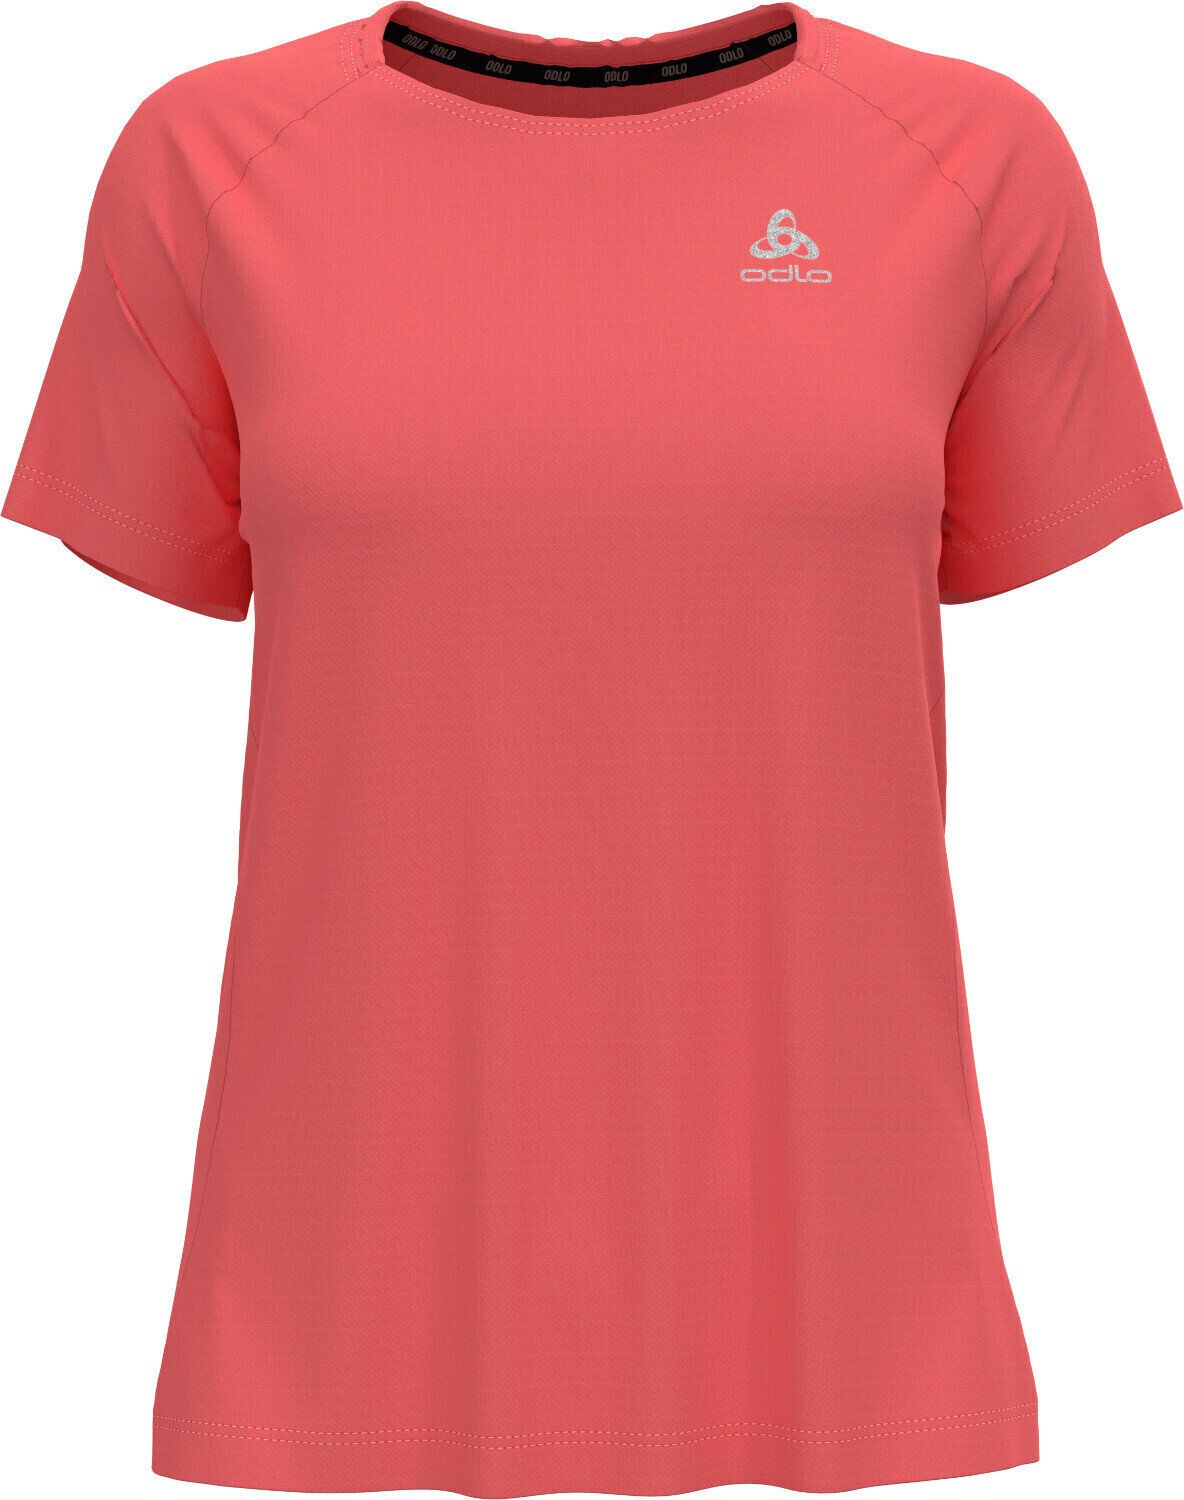 Laufshirt mit Kurzarm
 Odlo Essential T-Shirt Siesta XS Laufshirt mit Kurzarm